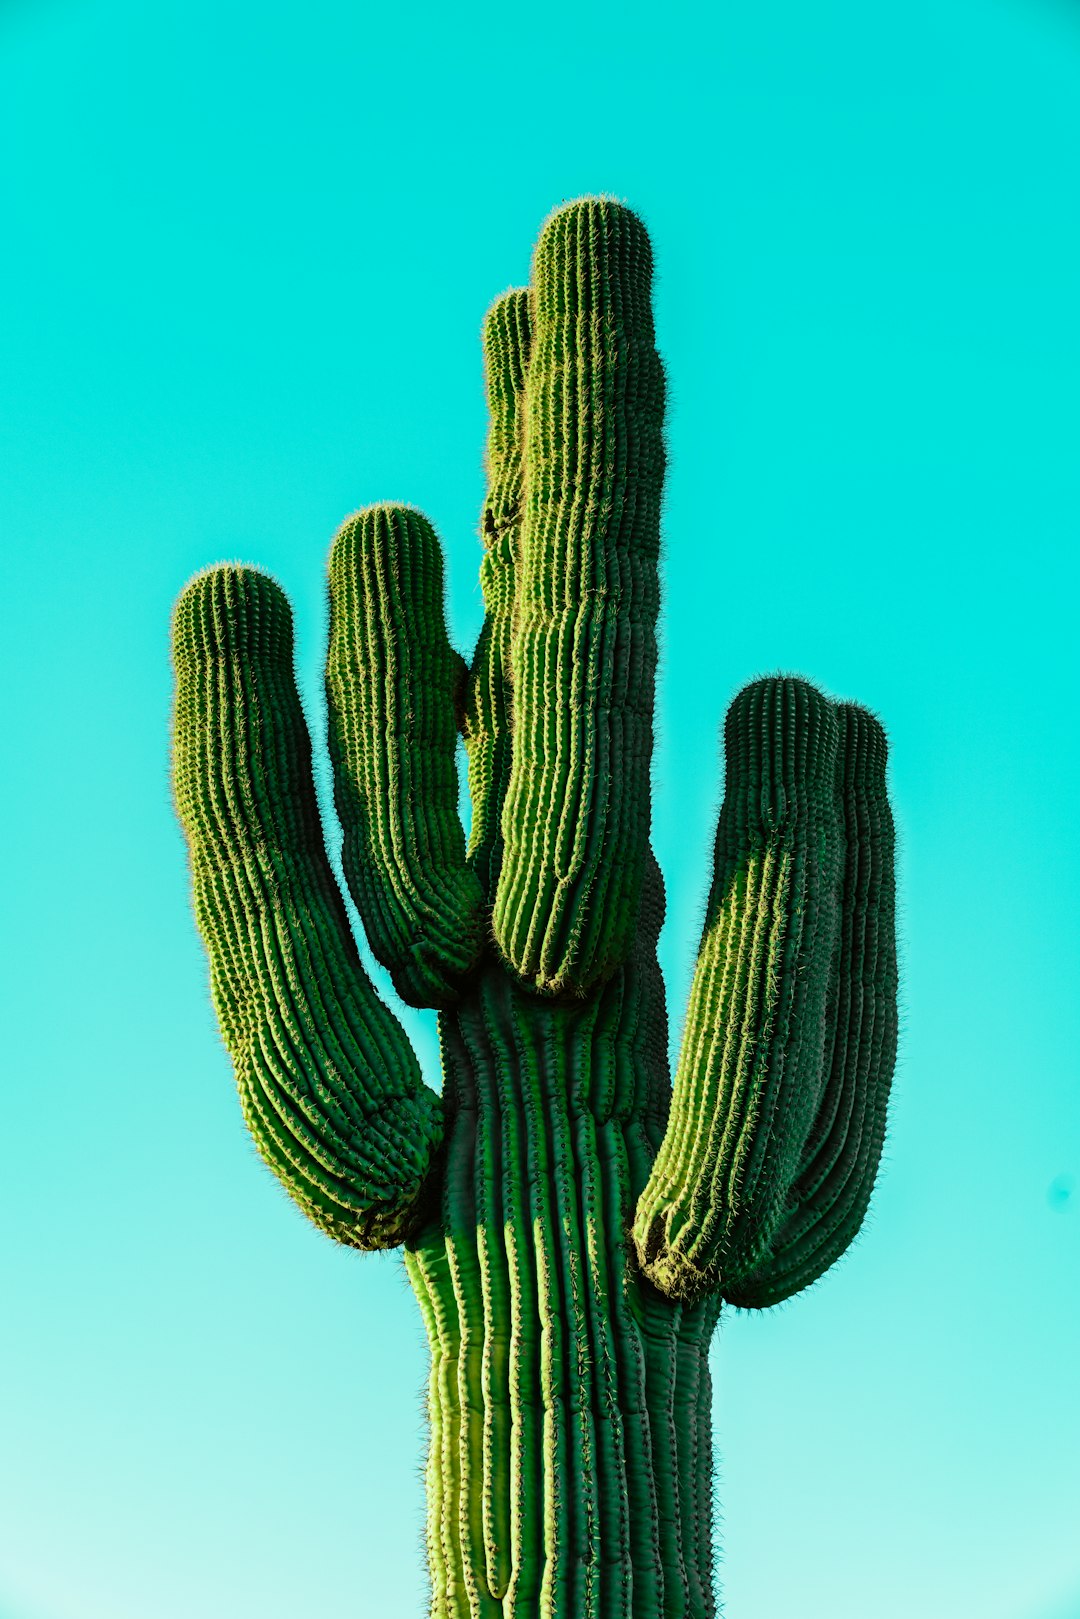 cactus images free download